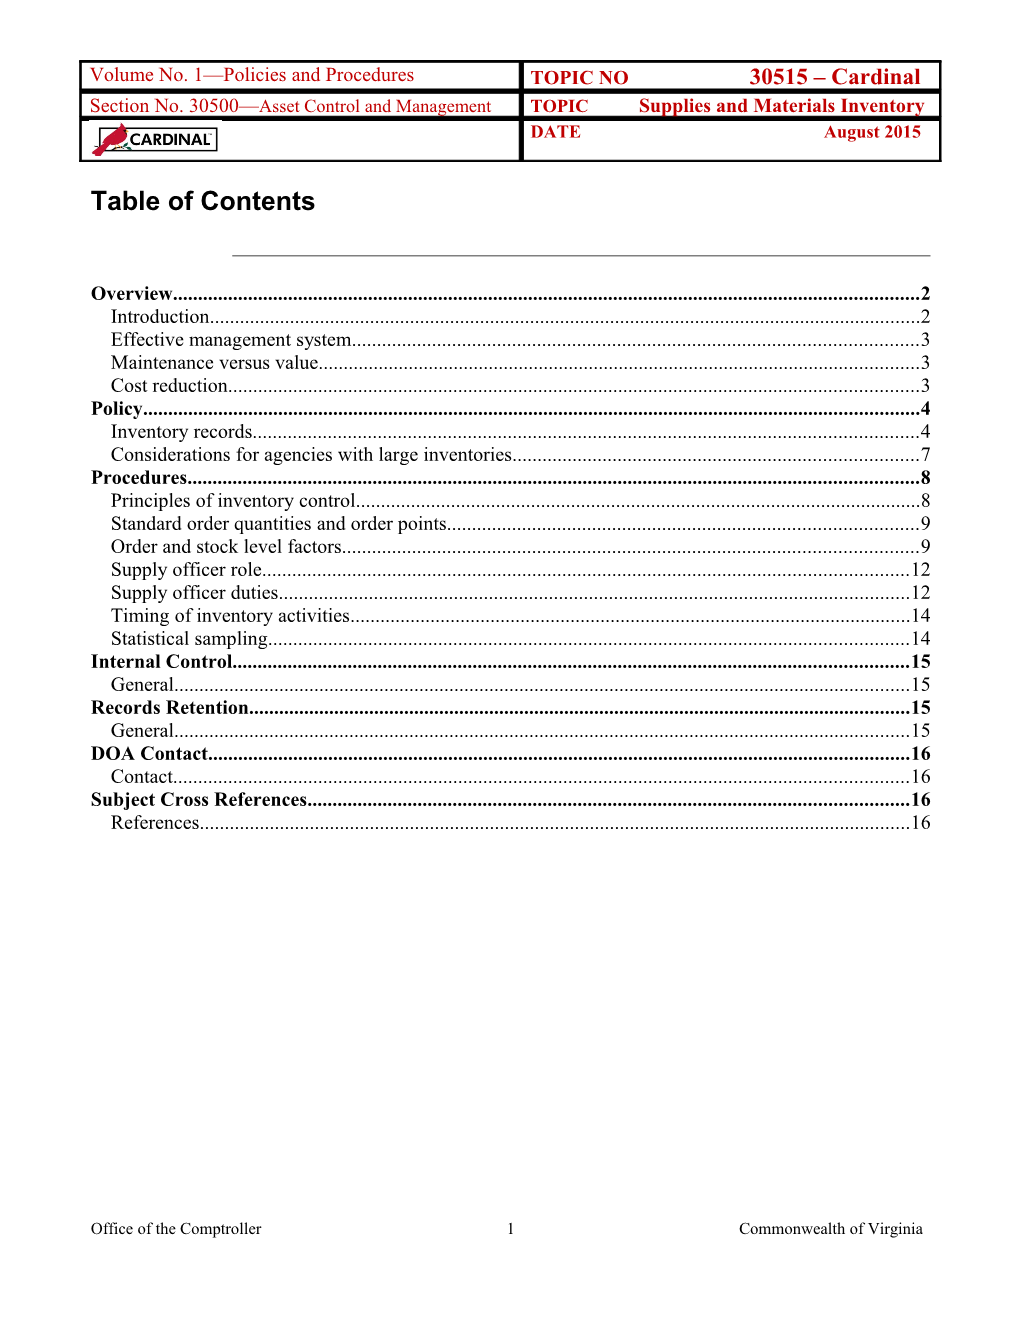 CAPP Manual - 30515 - Supplies and Materials Inventory